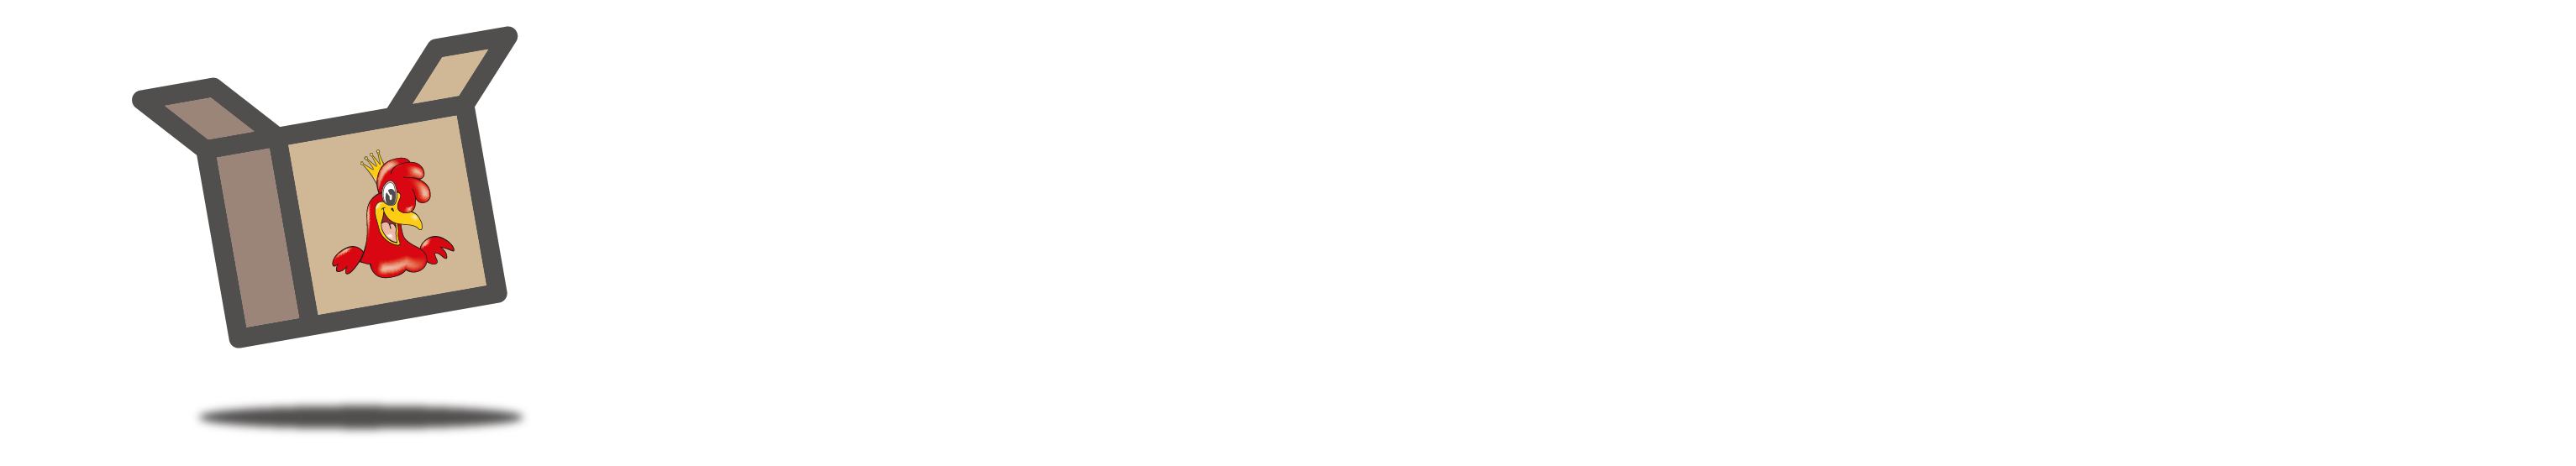 chickendeal-logo-tagline-white